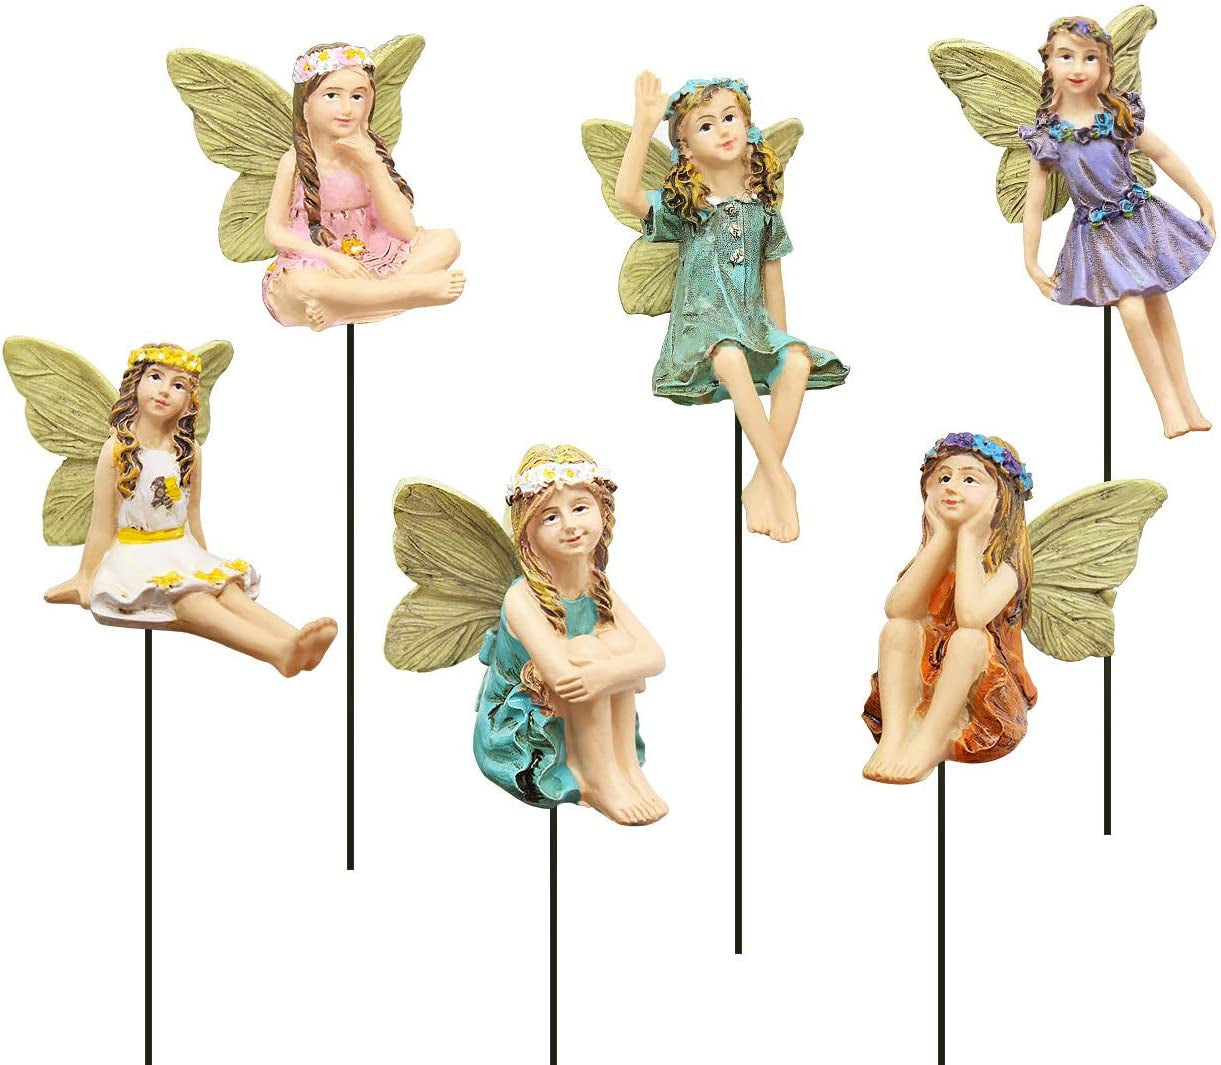 FANWNKI, FANWNKI Fairy Garden Vintage Resin Fairy Figurines for Outdoor Garden Yard Lawn Supplies Home Decor Set of 6